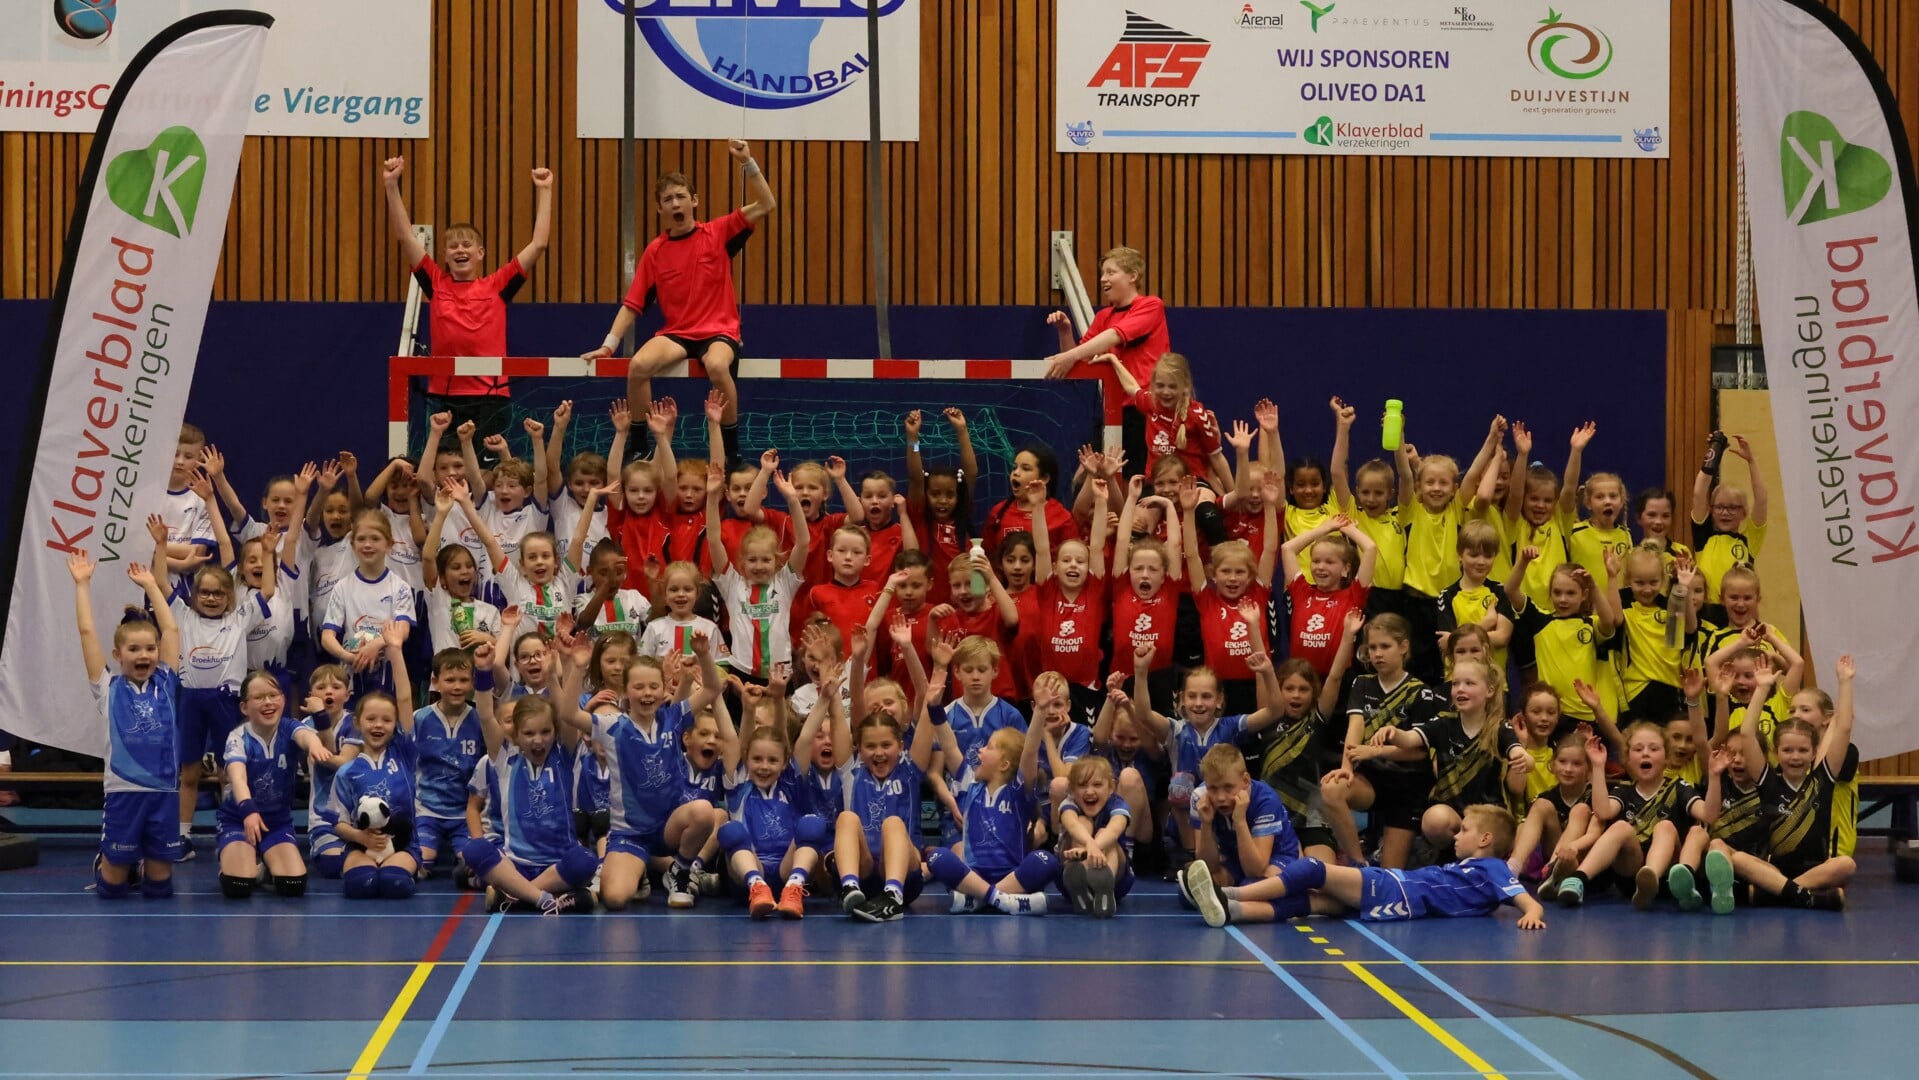 De enthousiaste deelnemers aan het Klaverblad Paasbaltoernooi. (foto Wilma Alleblas)